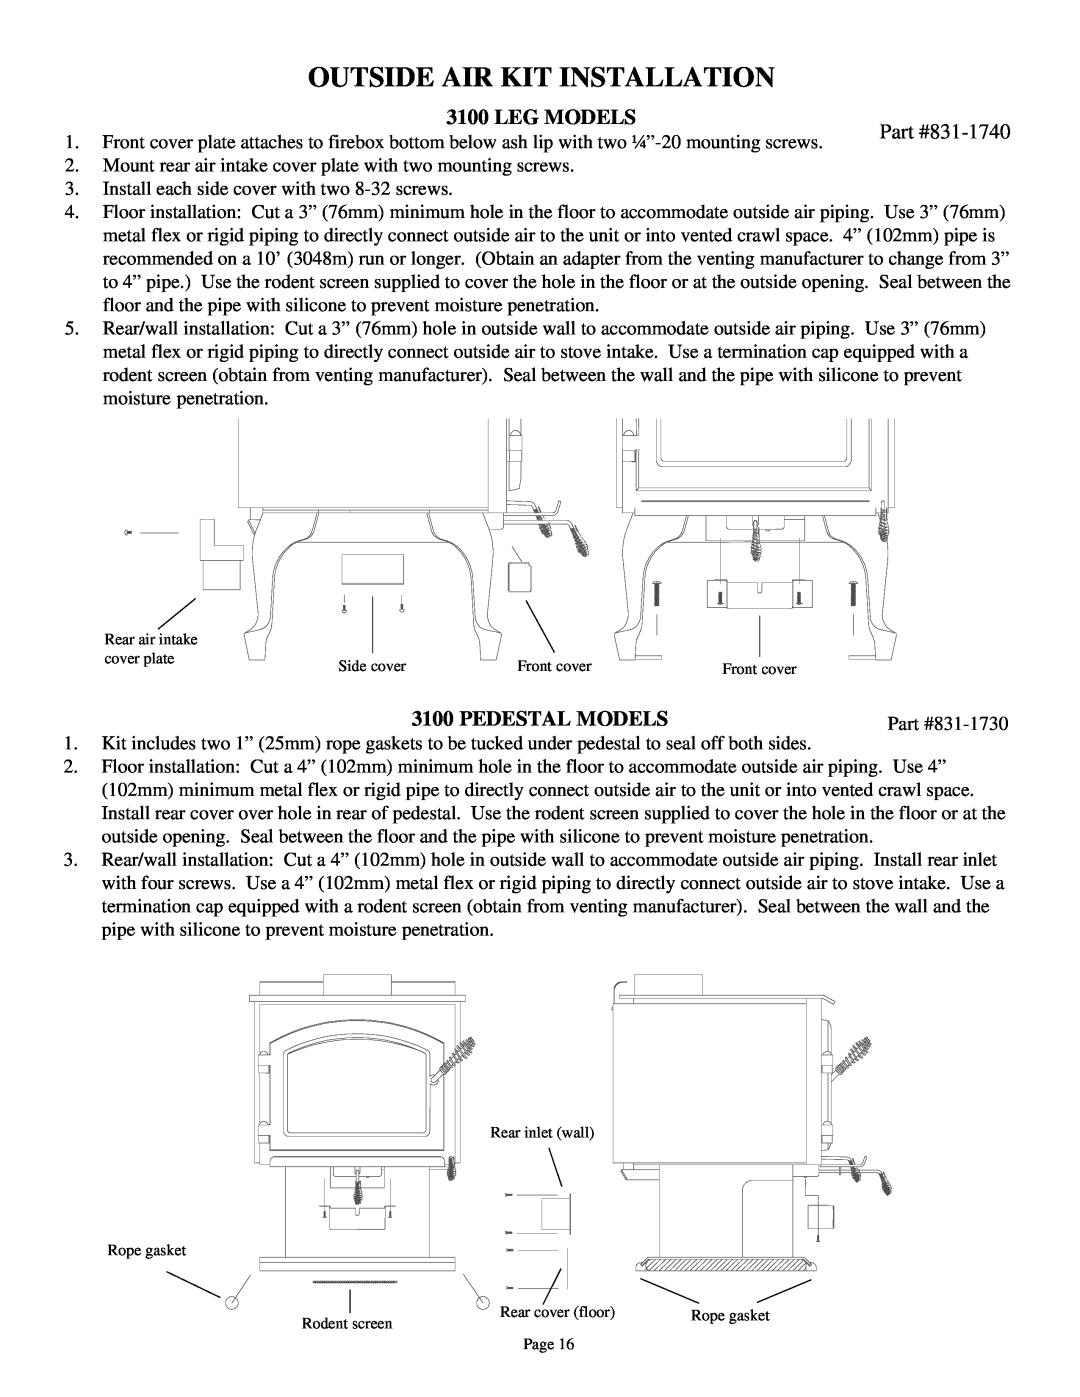 Quadra-Fire 3100 owner manual Outside Air Kit Installation, Leg Models, Pedestal Models 